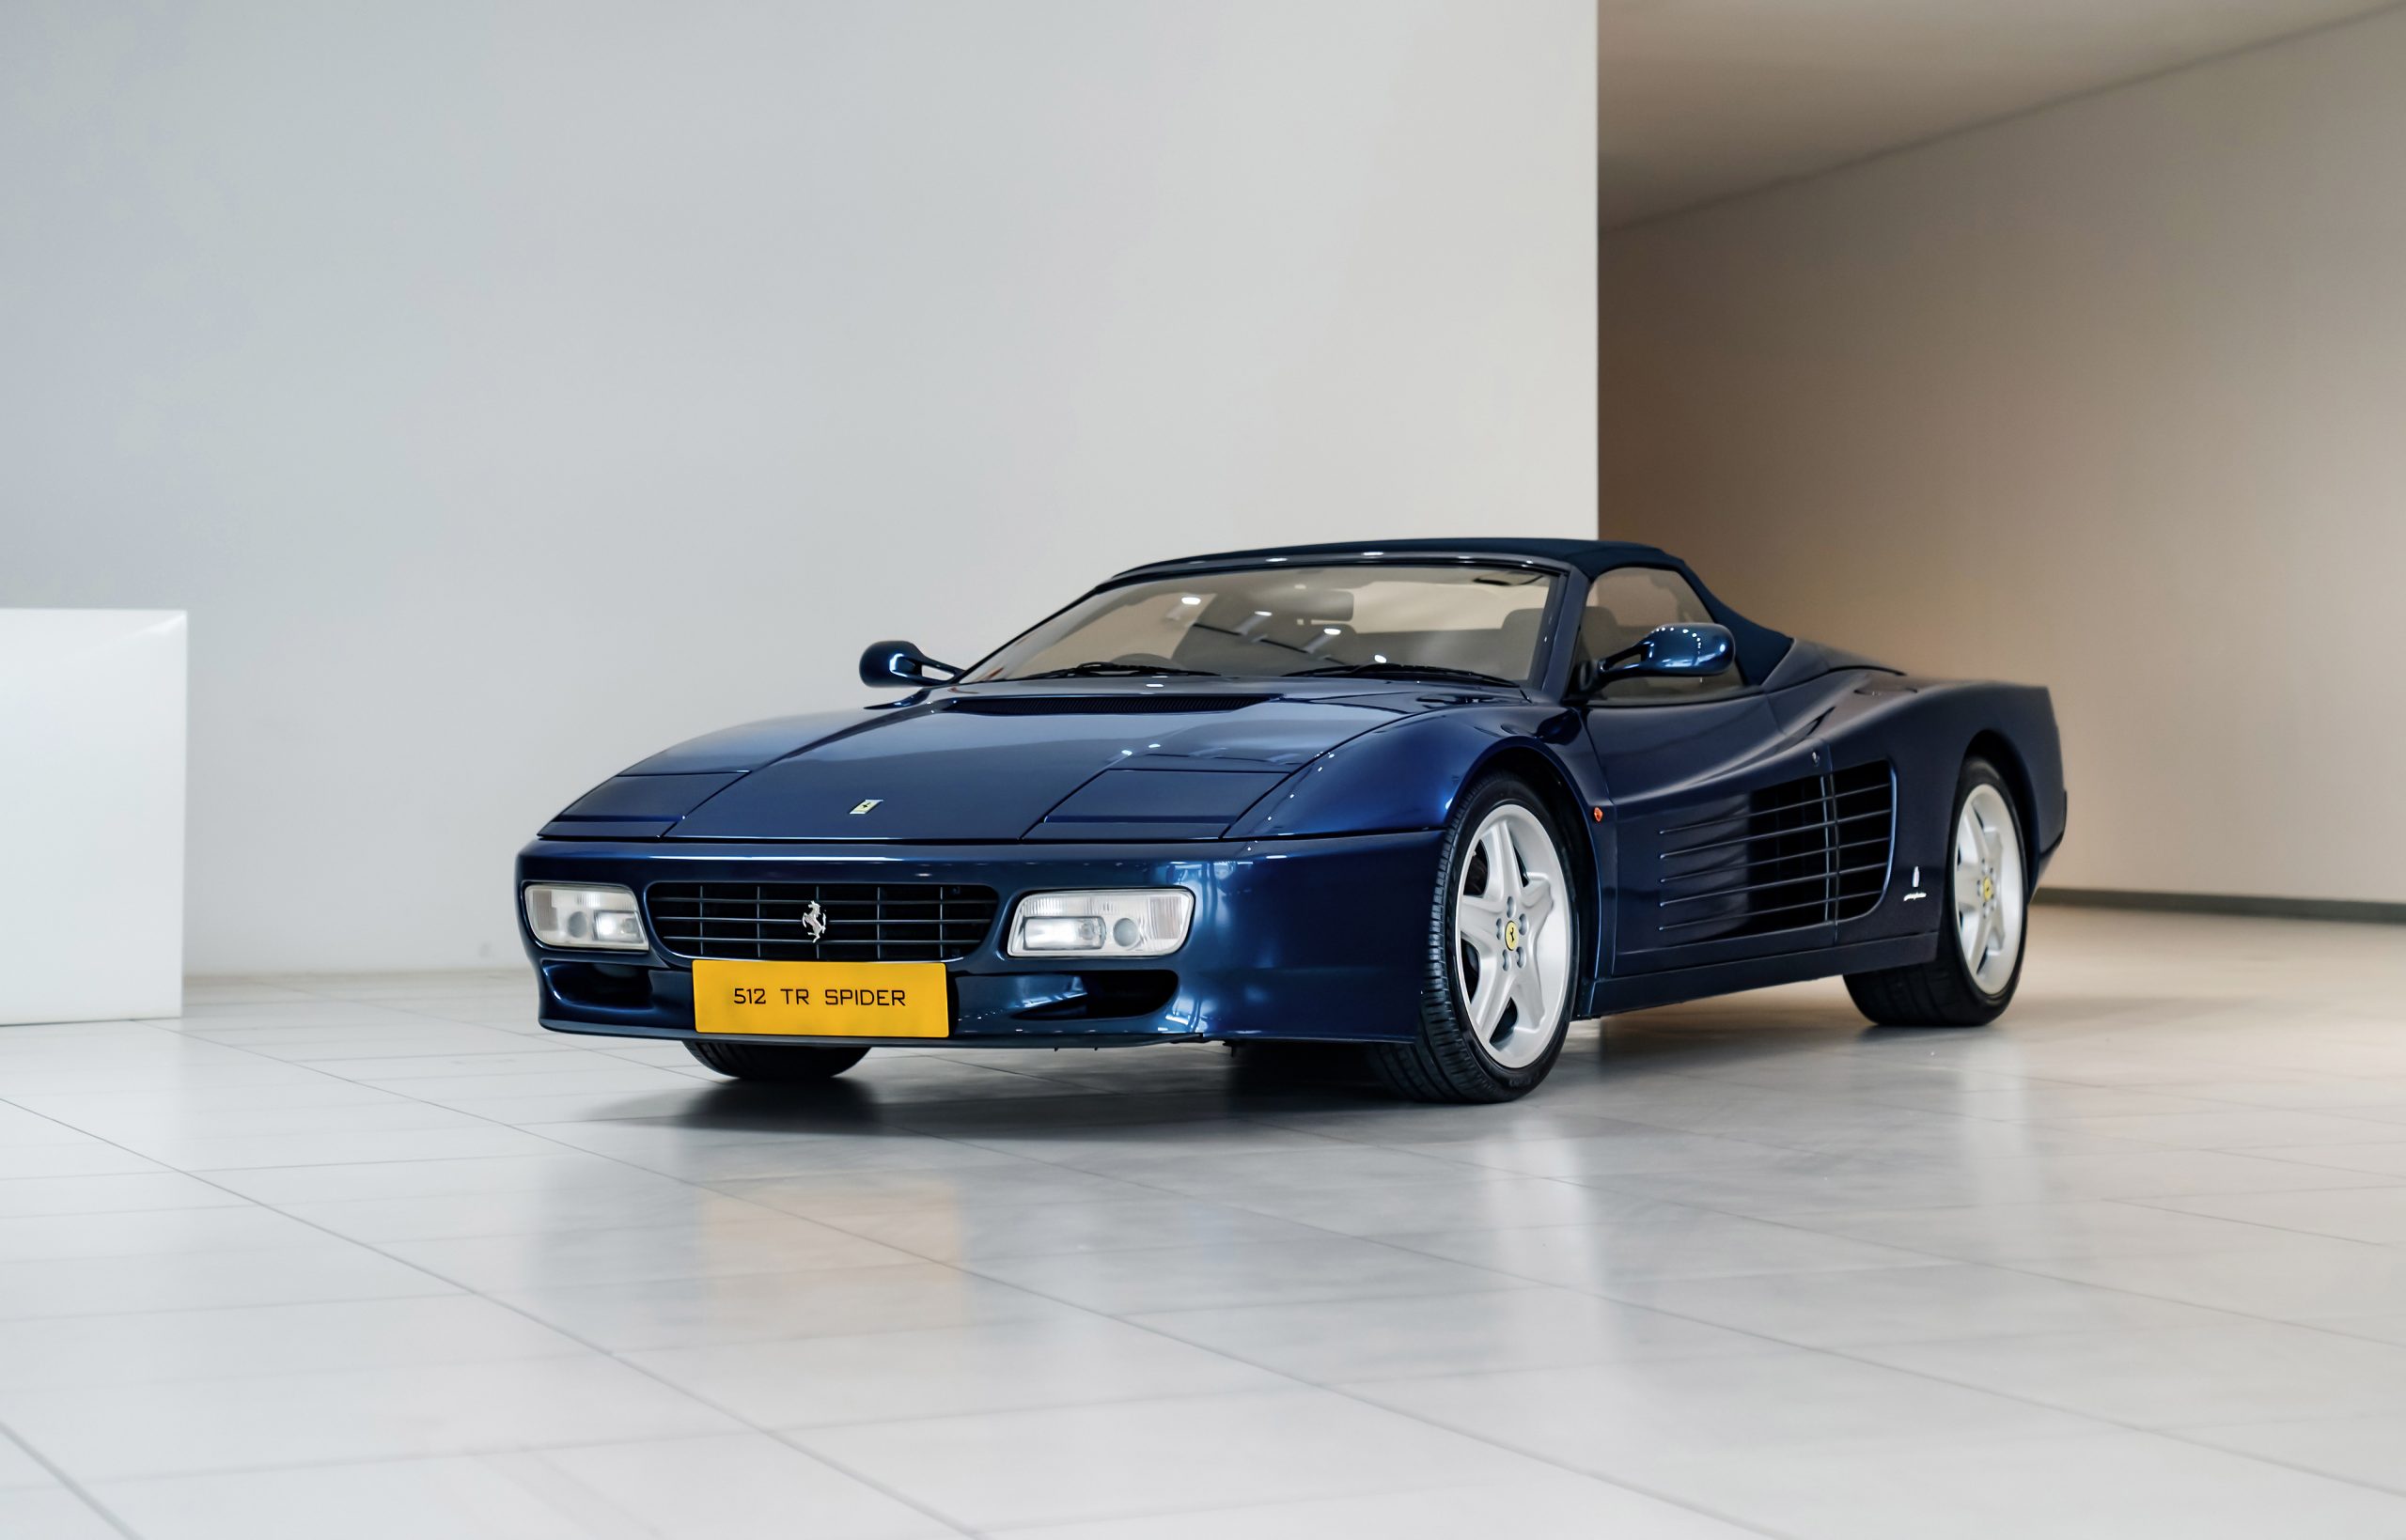 Factory-fresh Ferraris lead barely-driven auction